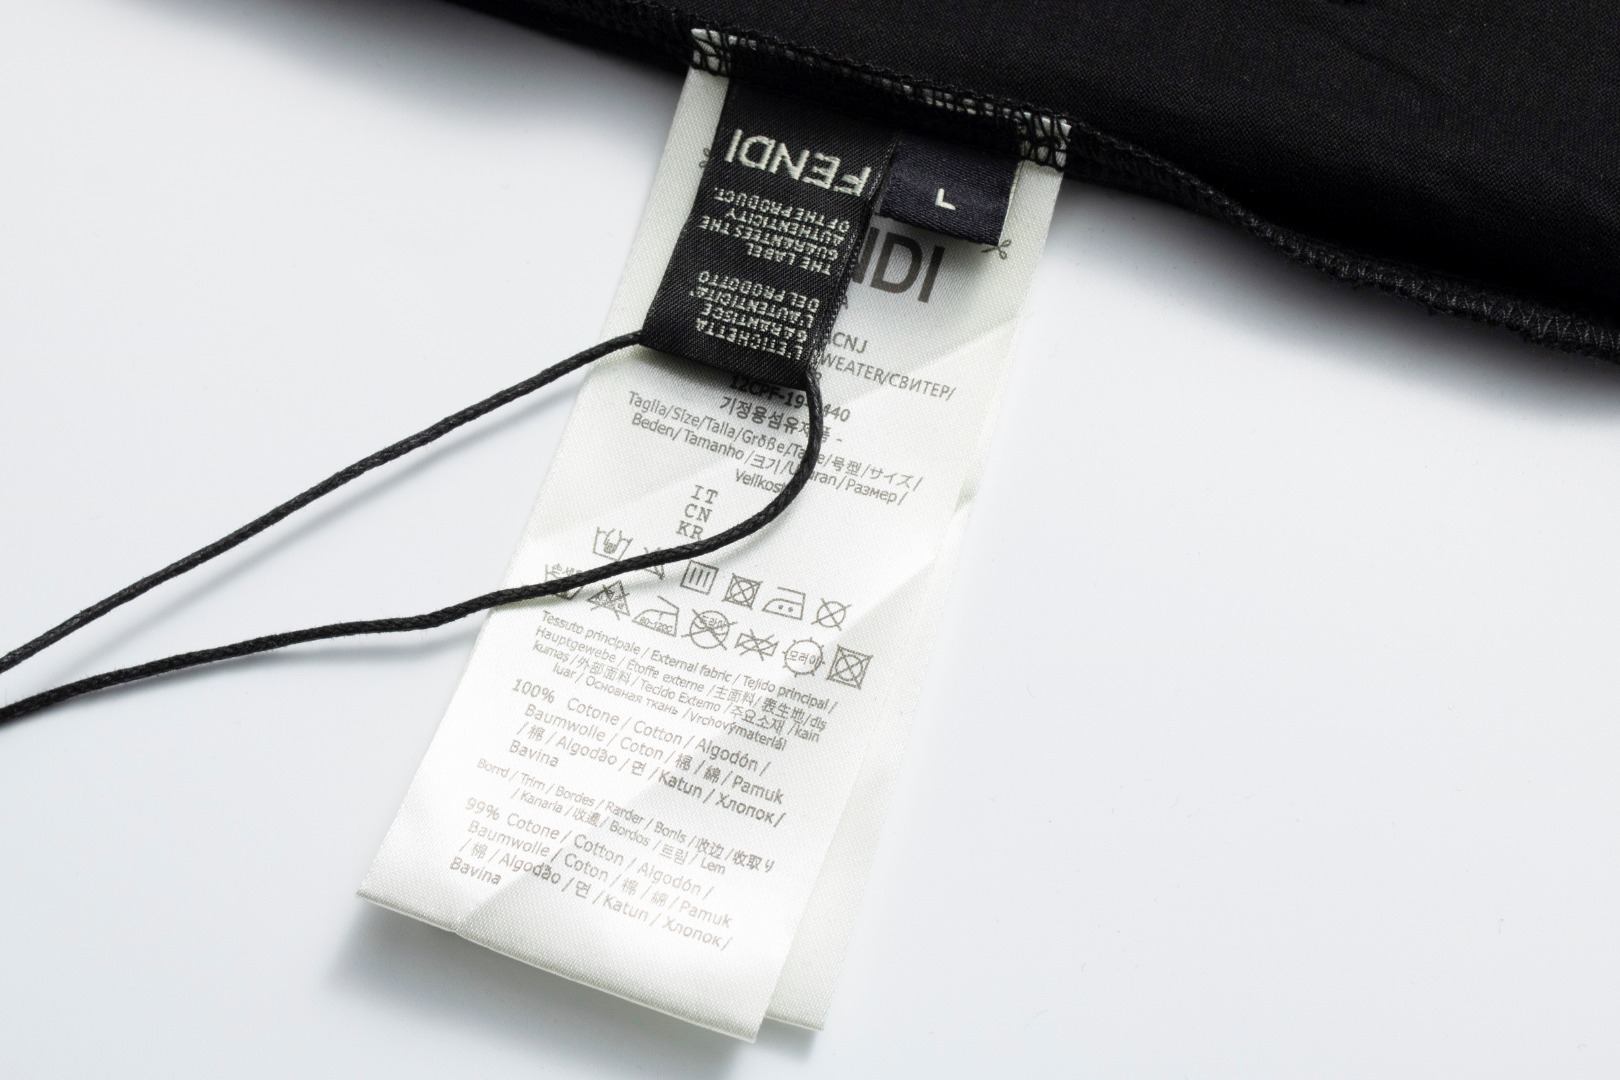 Fendi麂皮贴片T恤面料采用50支丝光双股克重190g手感柔软舒适亲肤搭配胸前Fendi麂皮贴片吸引眼